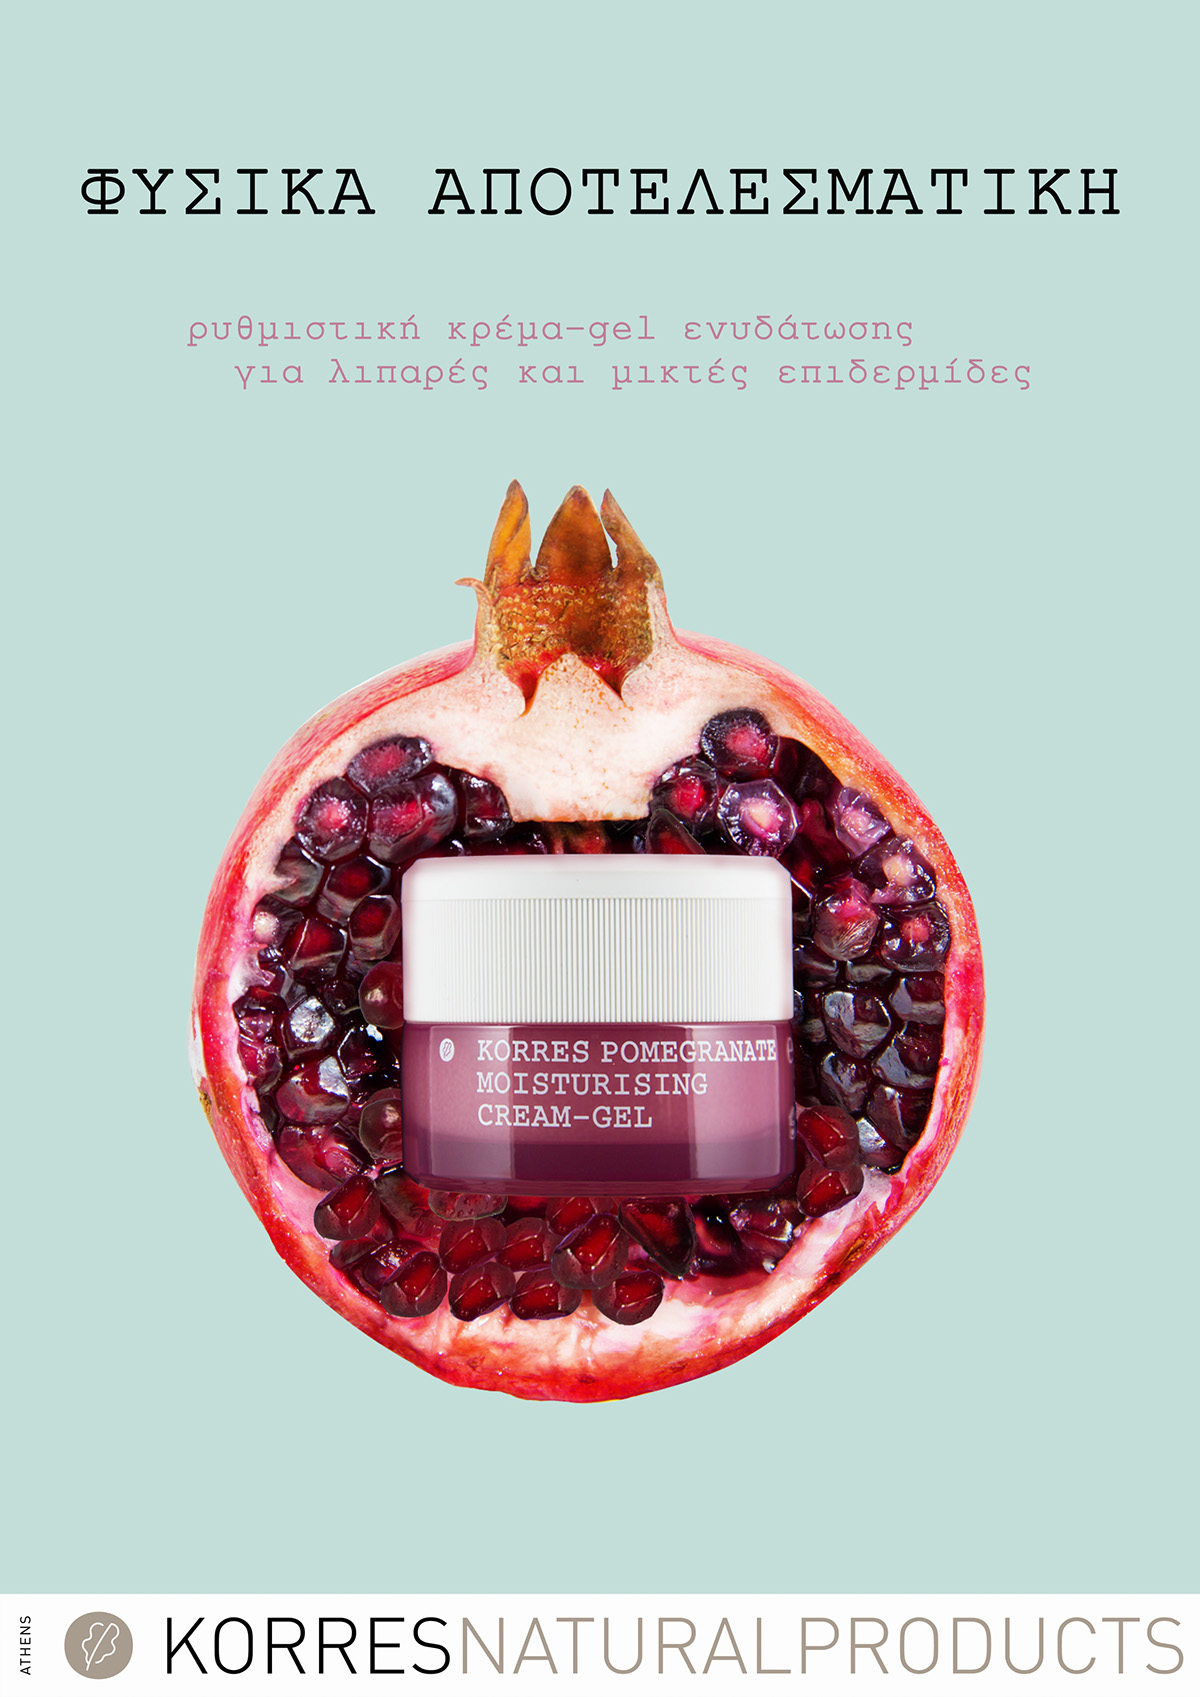 Korres pomegranate facial cream cosmetics colours studio lighting natural